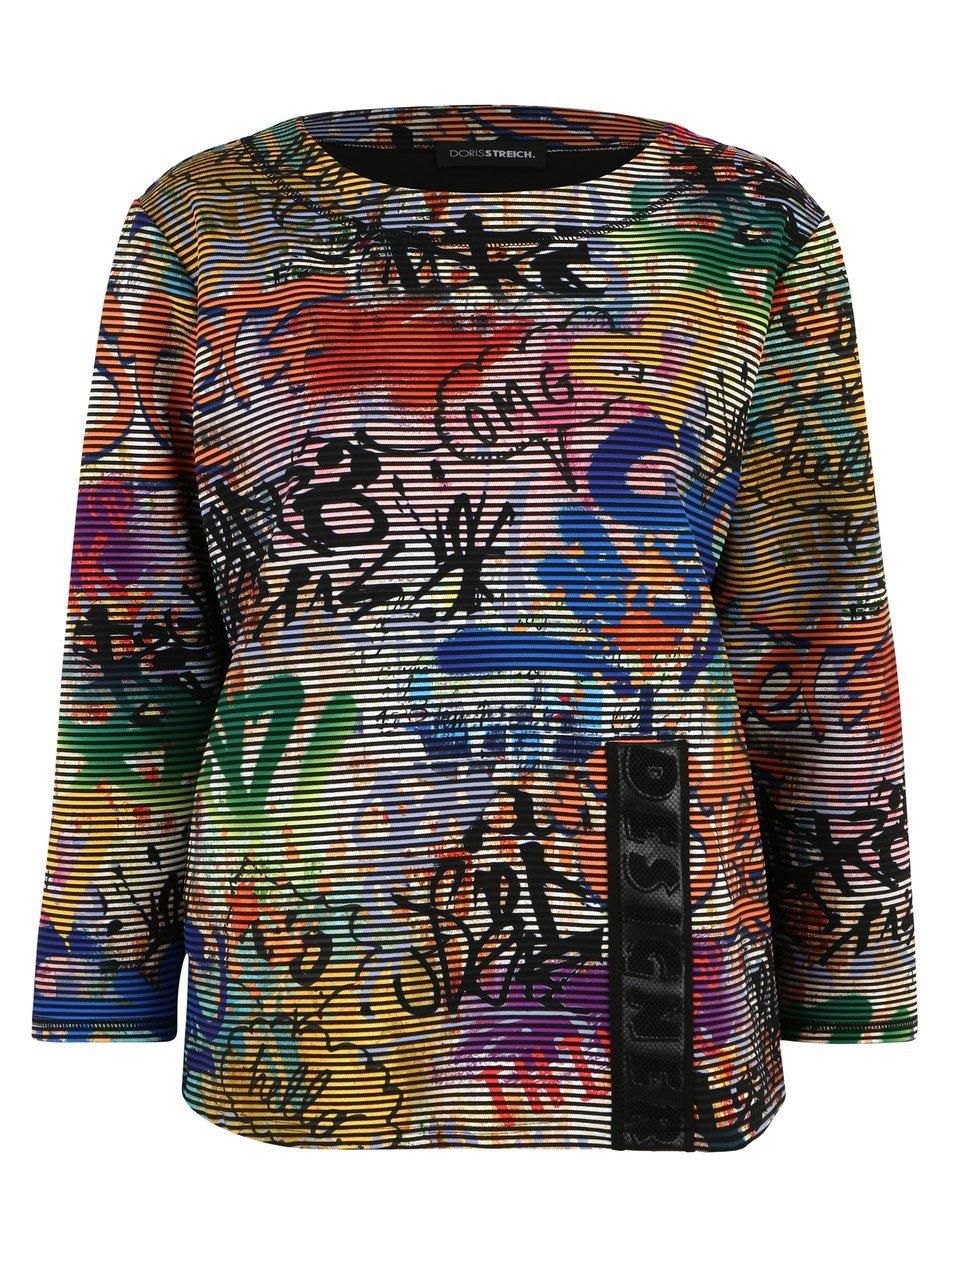 Sweatshirt ronde hals Van Doris Streich multicolour